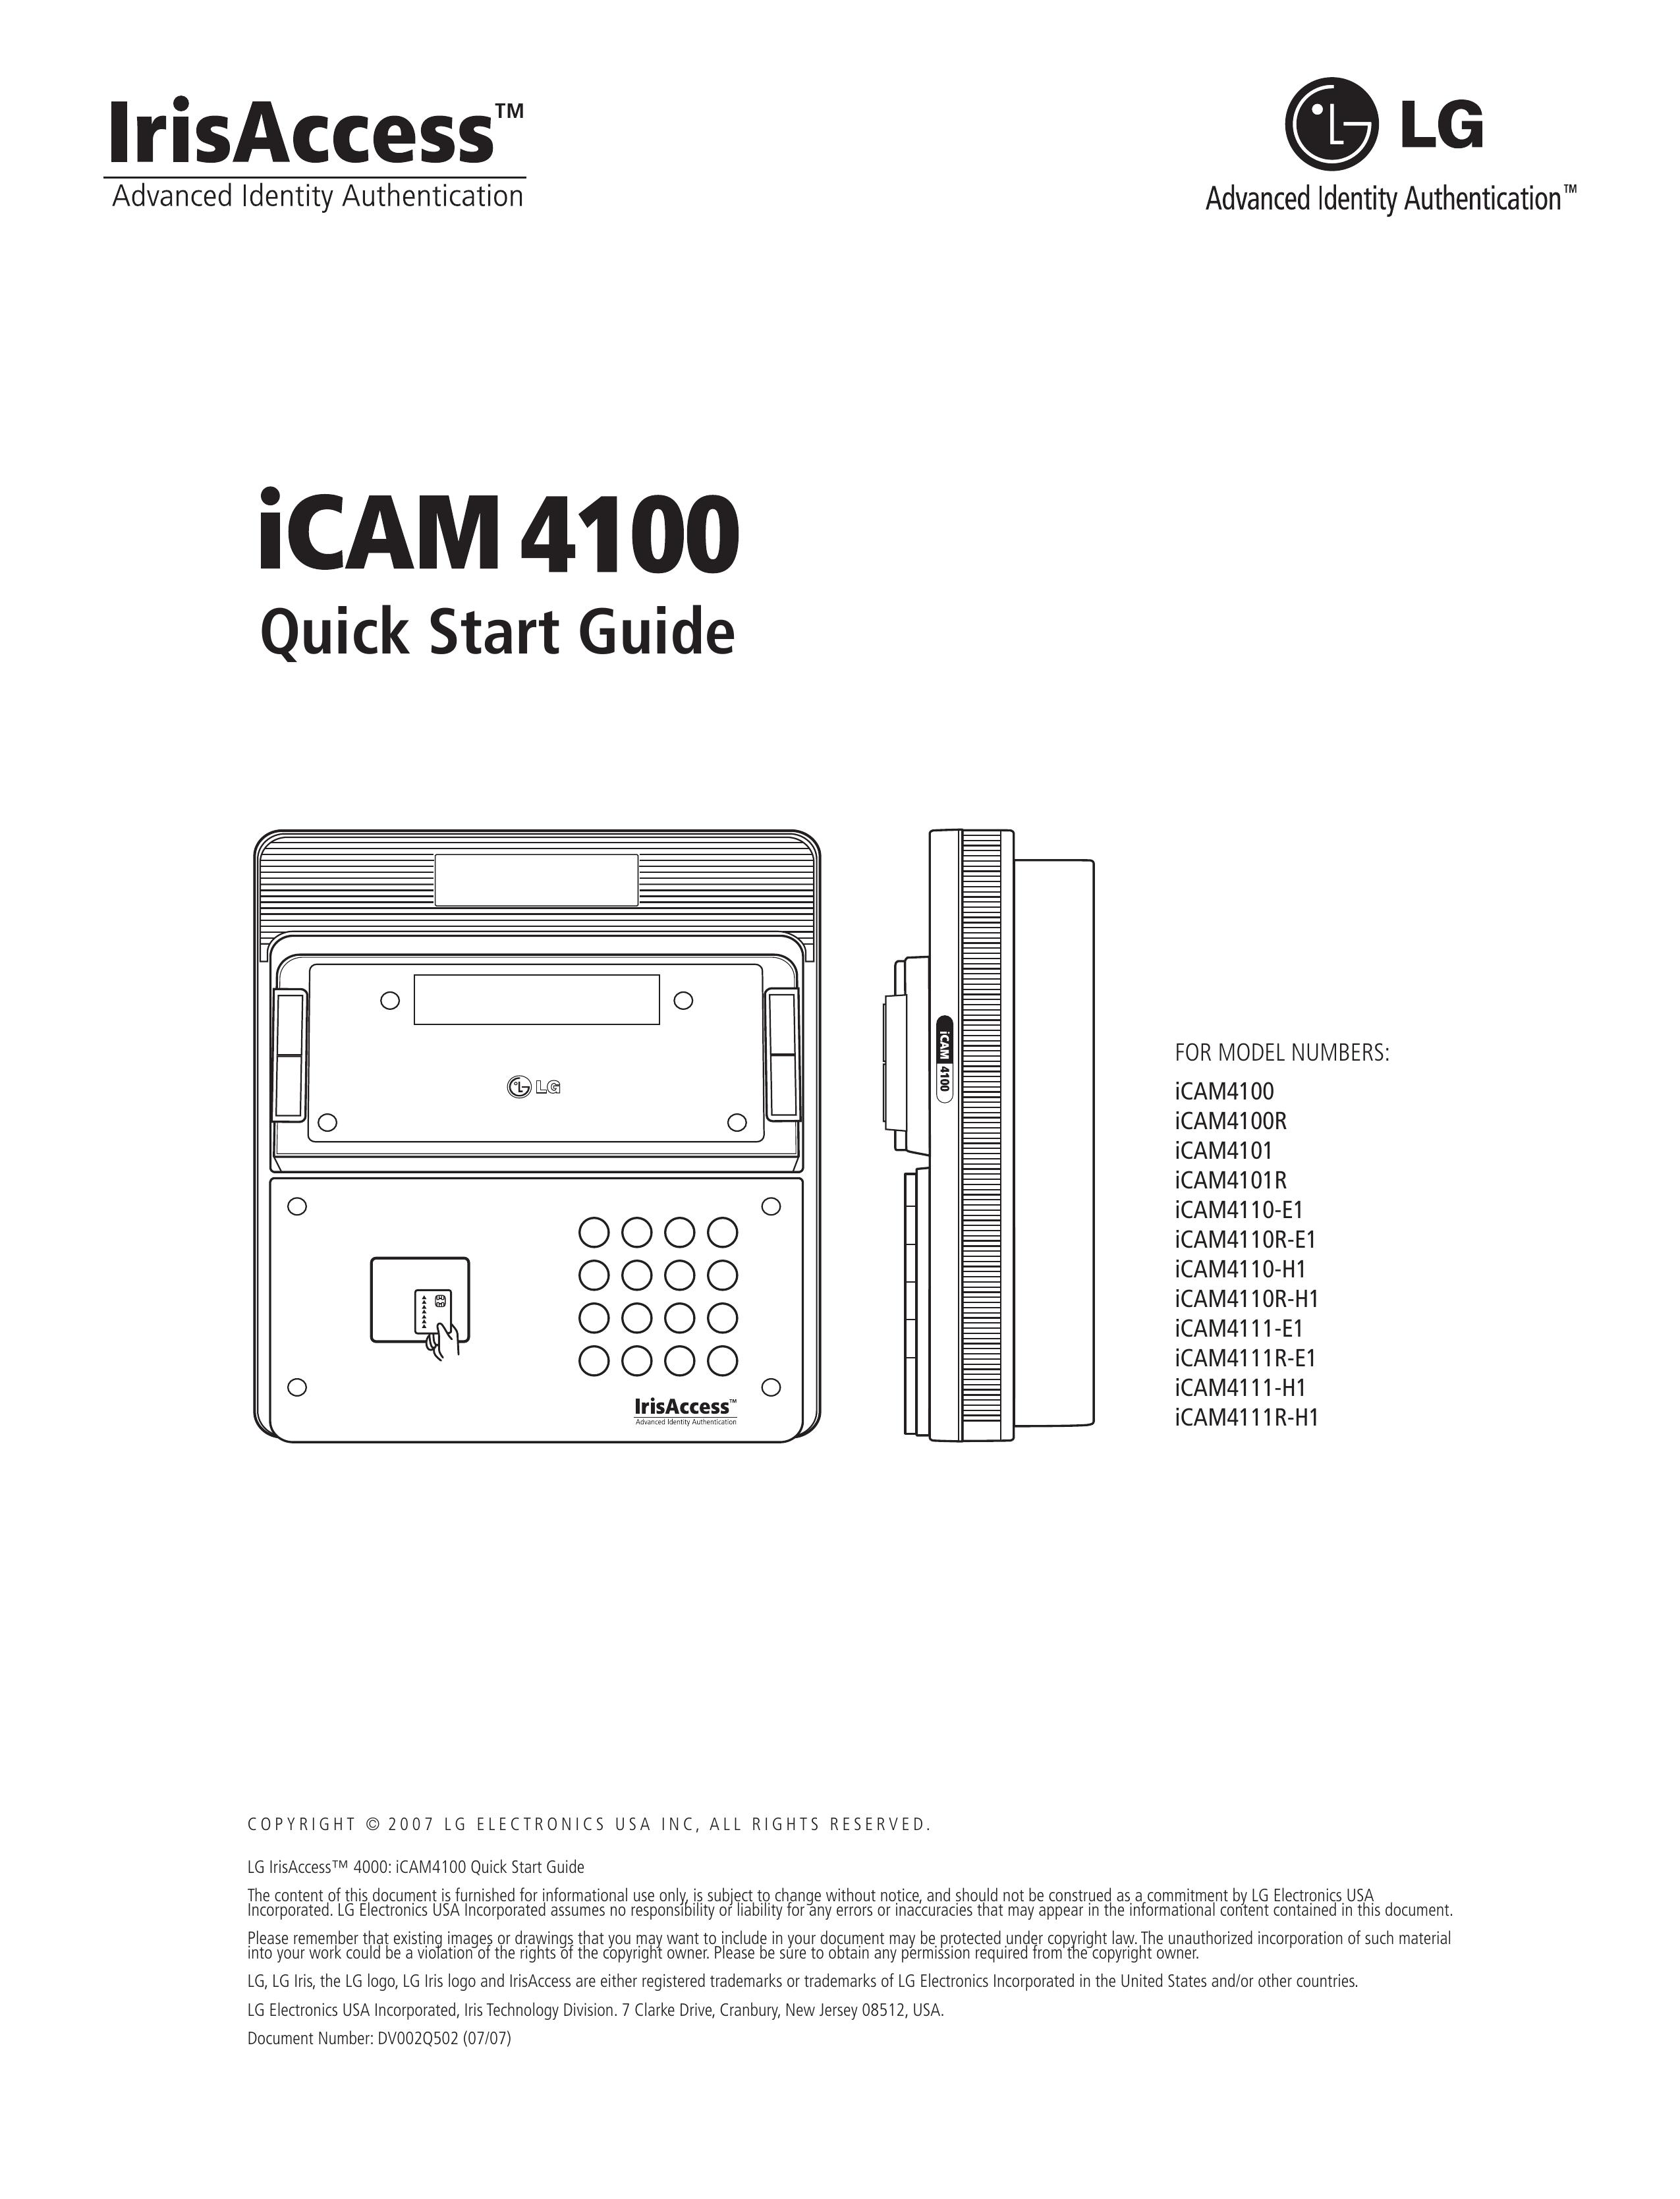 LG Electronics iCAM4110R-H1 Digital Camera User Manual